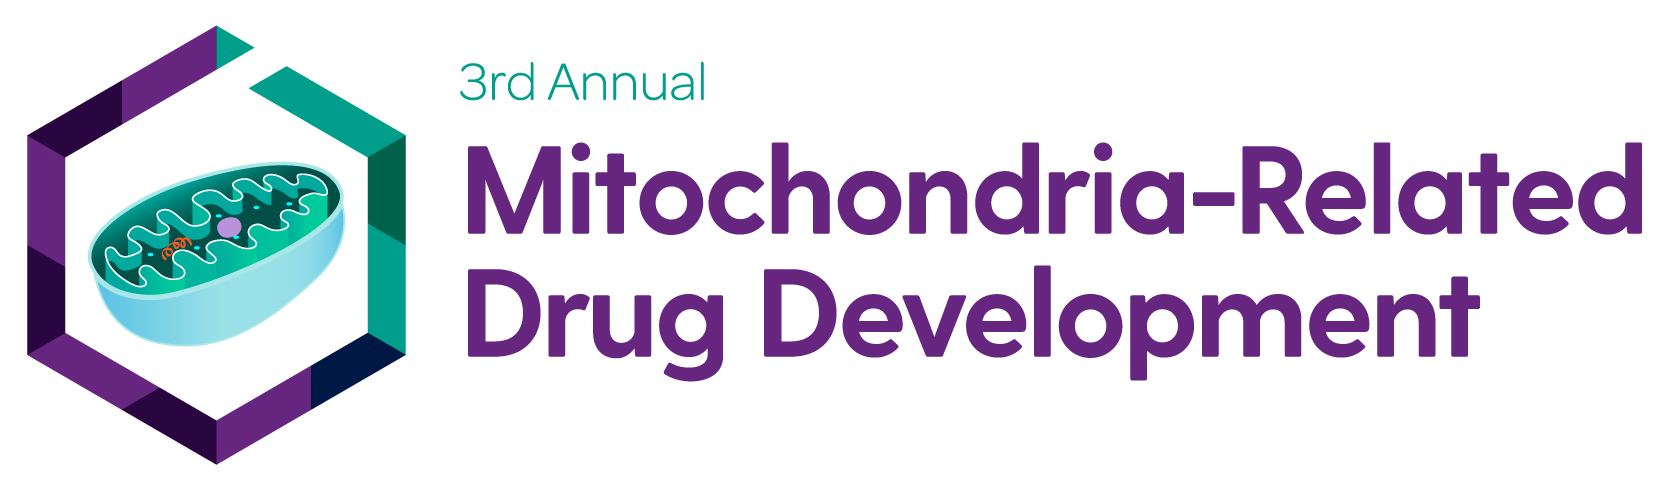 Mitochondria-related_Drug_Development - Next in series